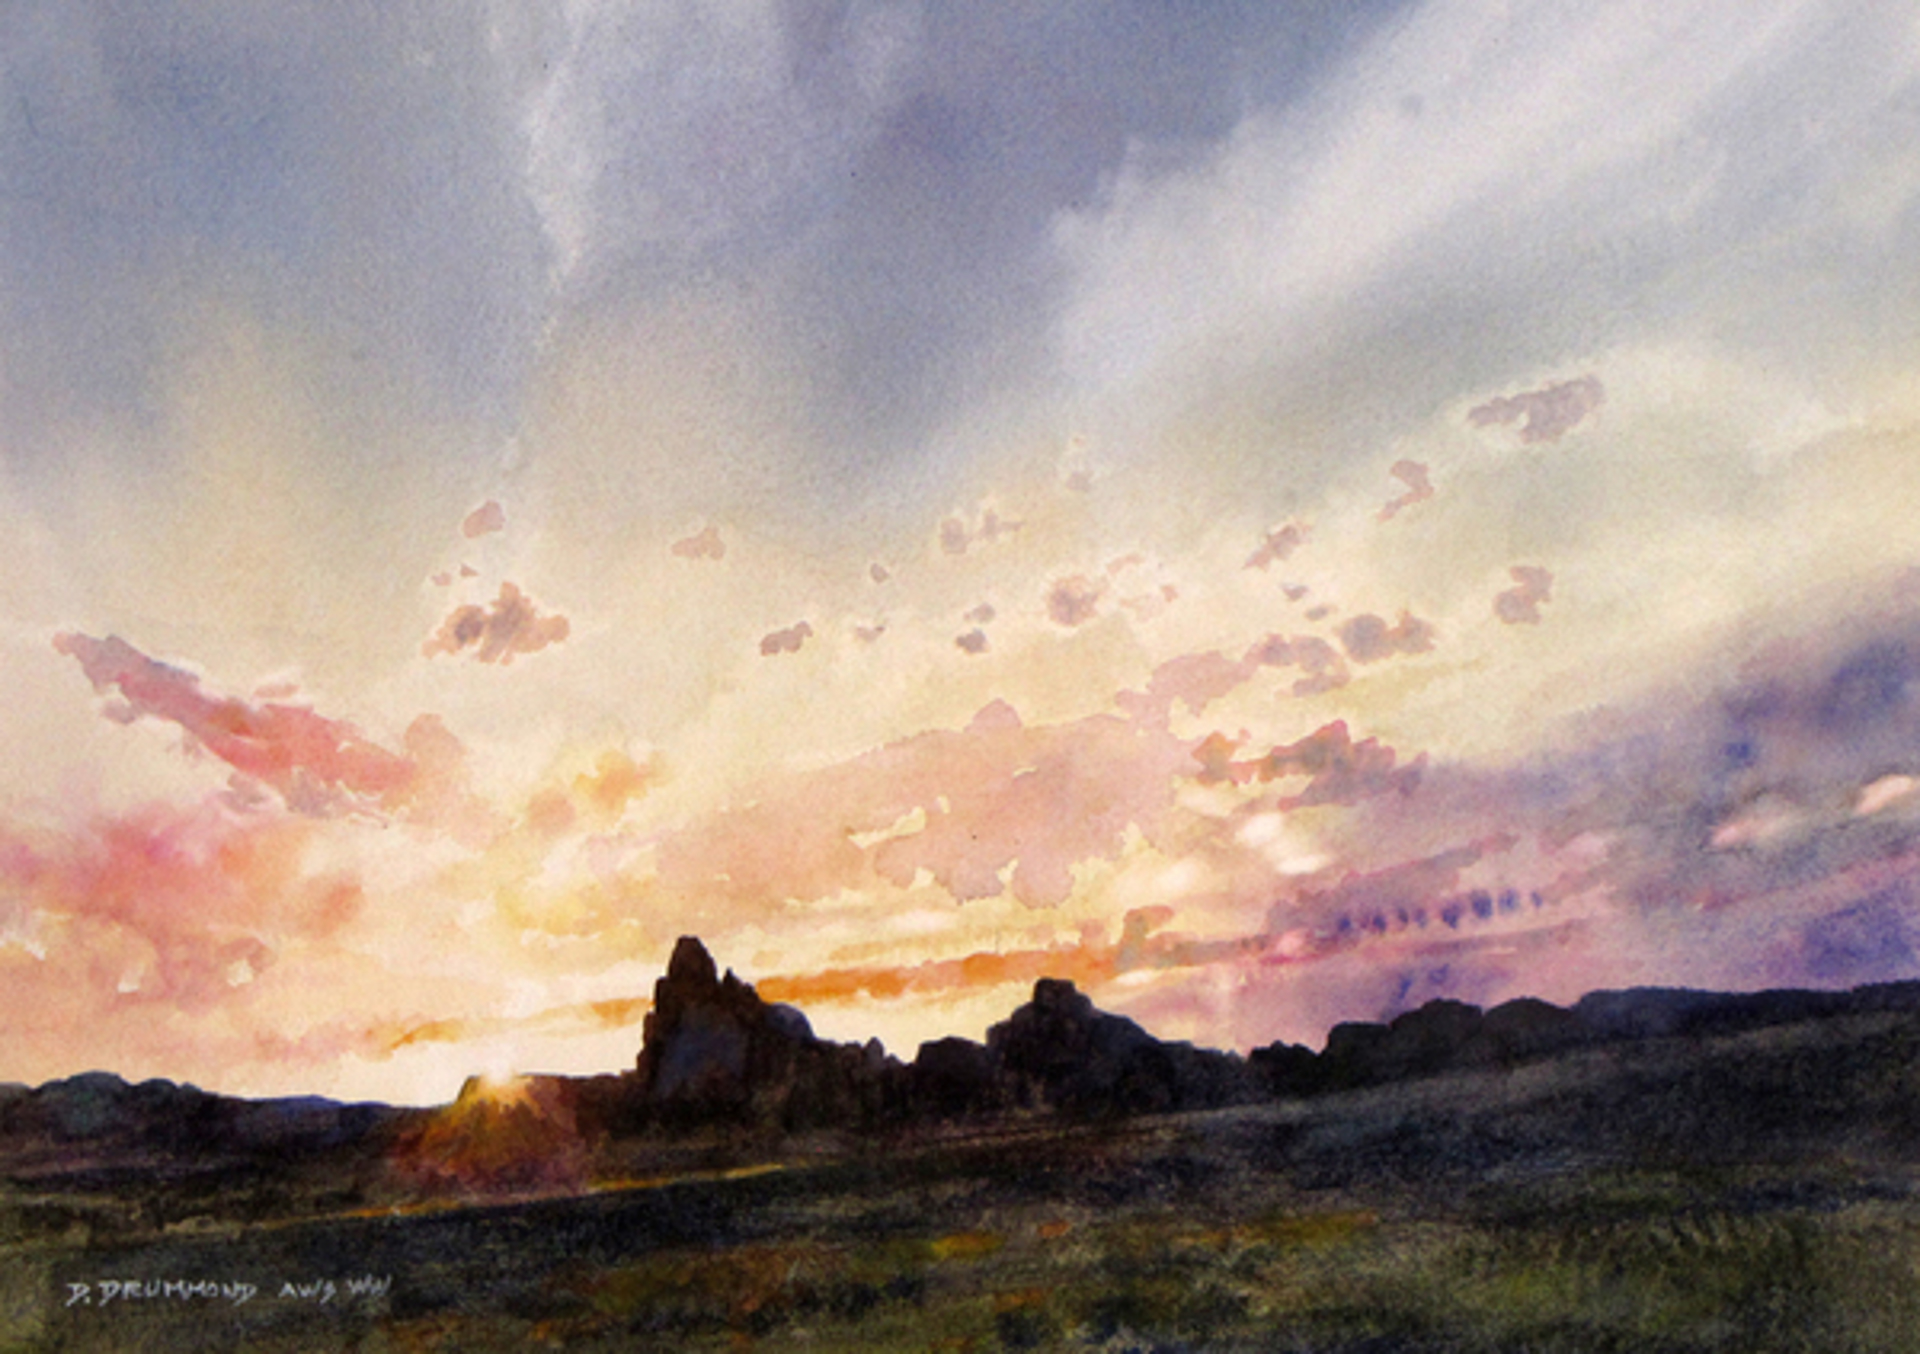 Utah Sunrise by David Drummond